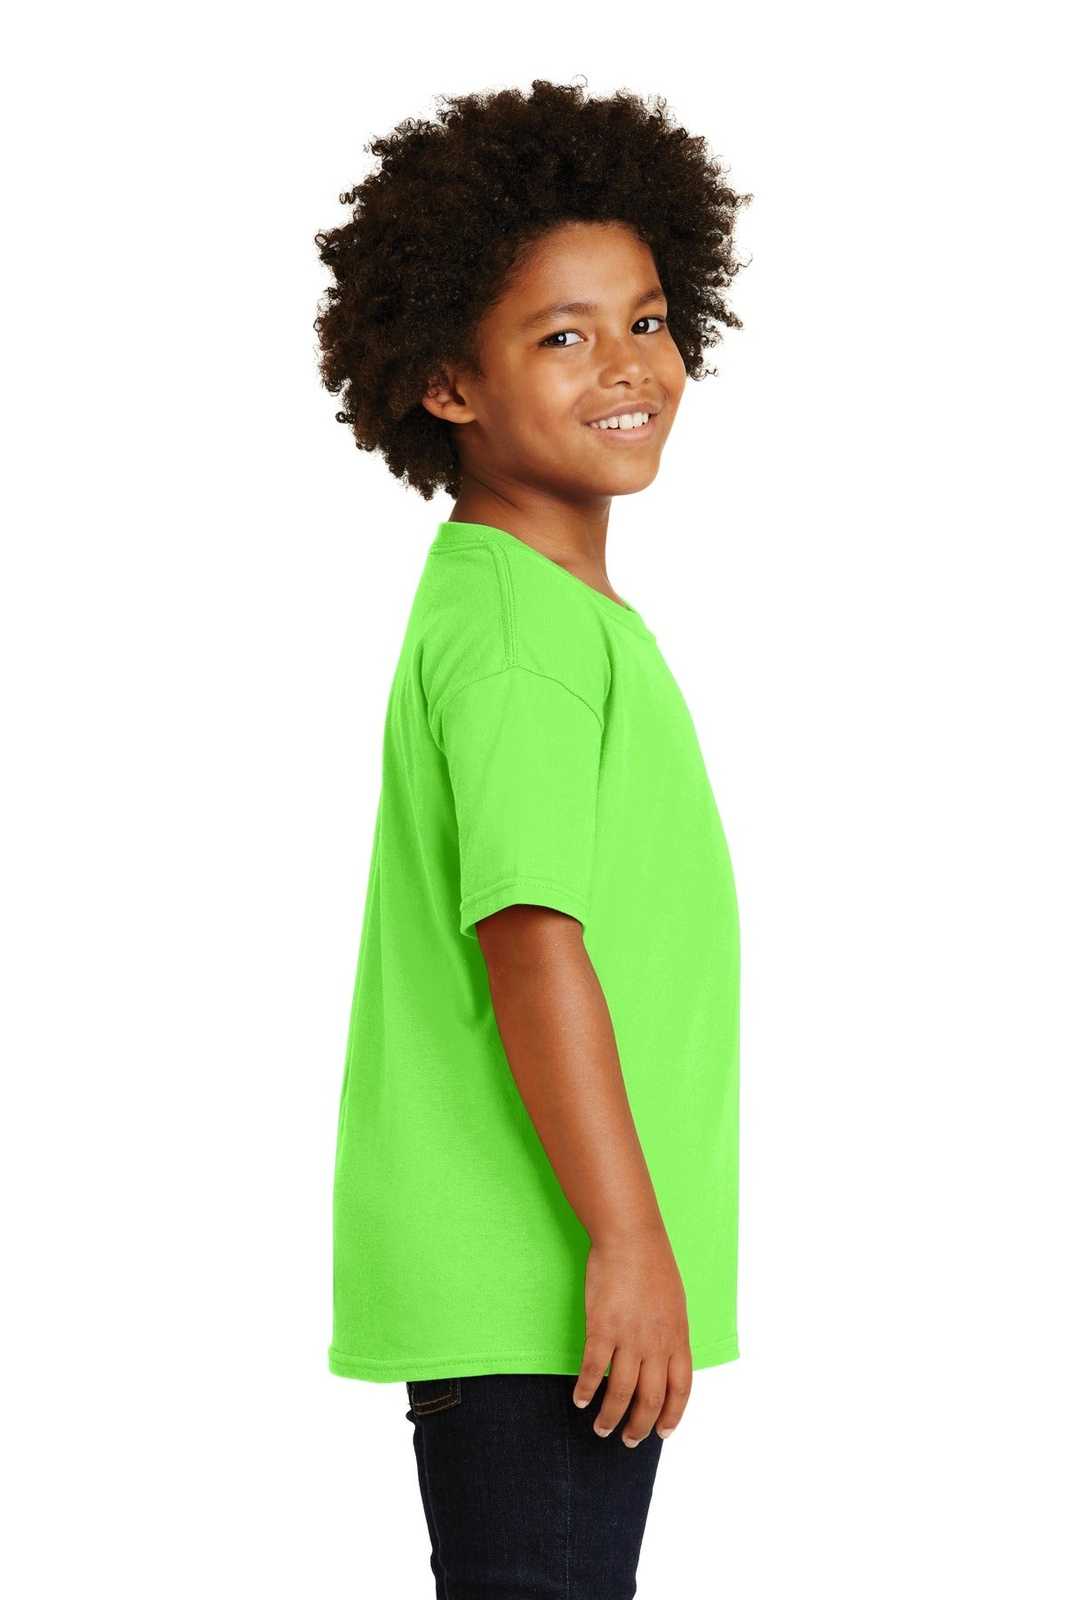 Gildan 5000B Youth Heavy Cotton 100% Cotton T-Shirt - Neon Green - HIT a Double